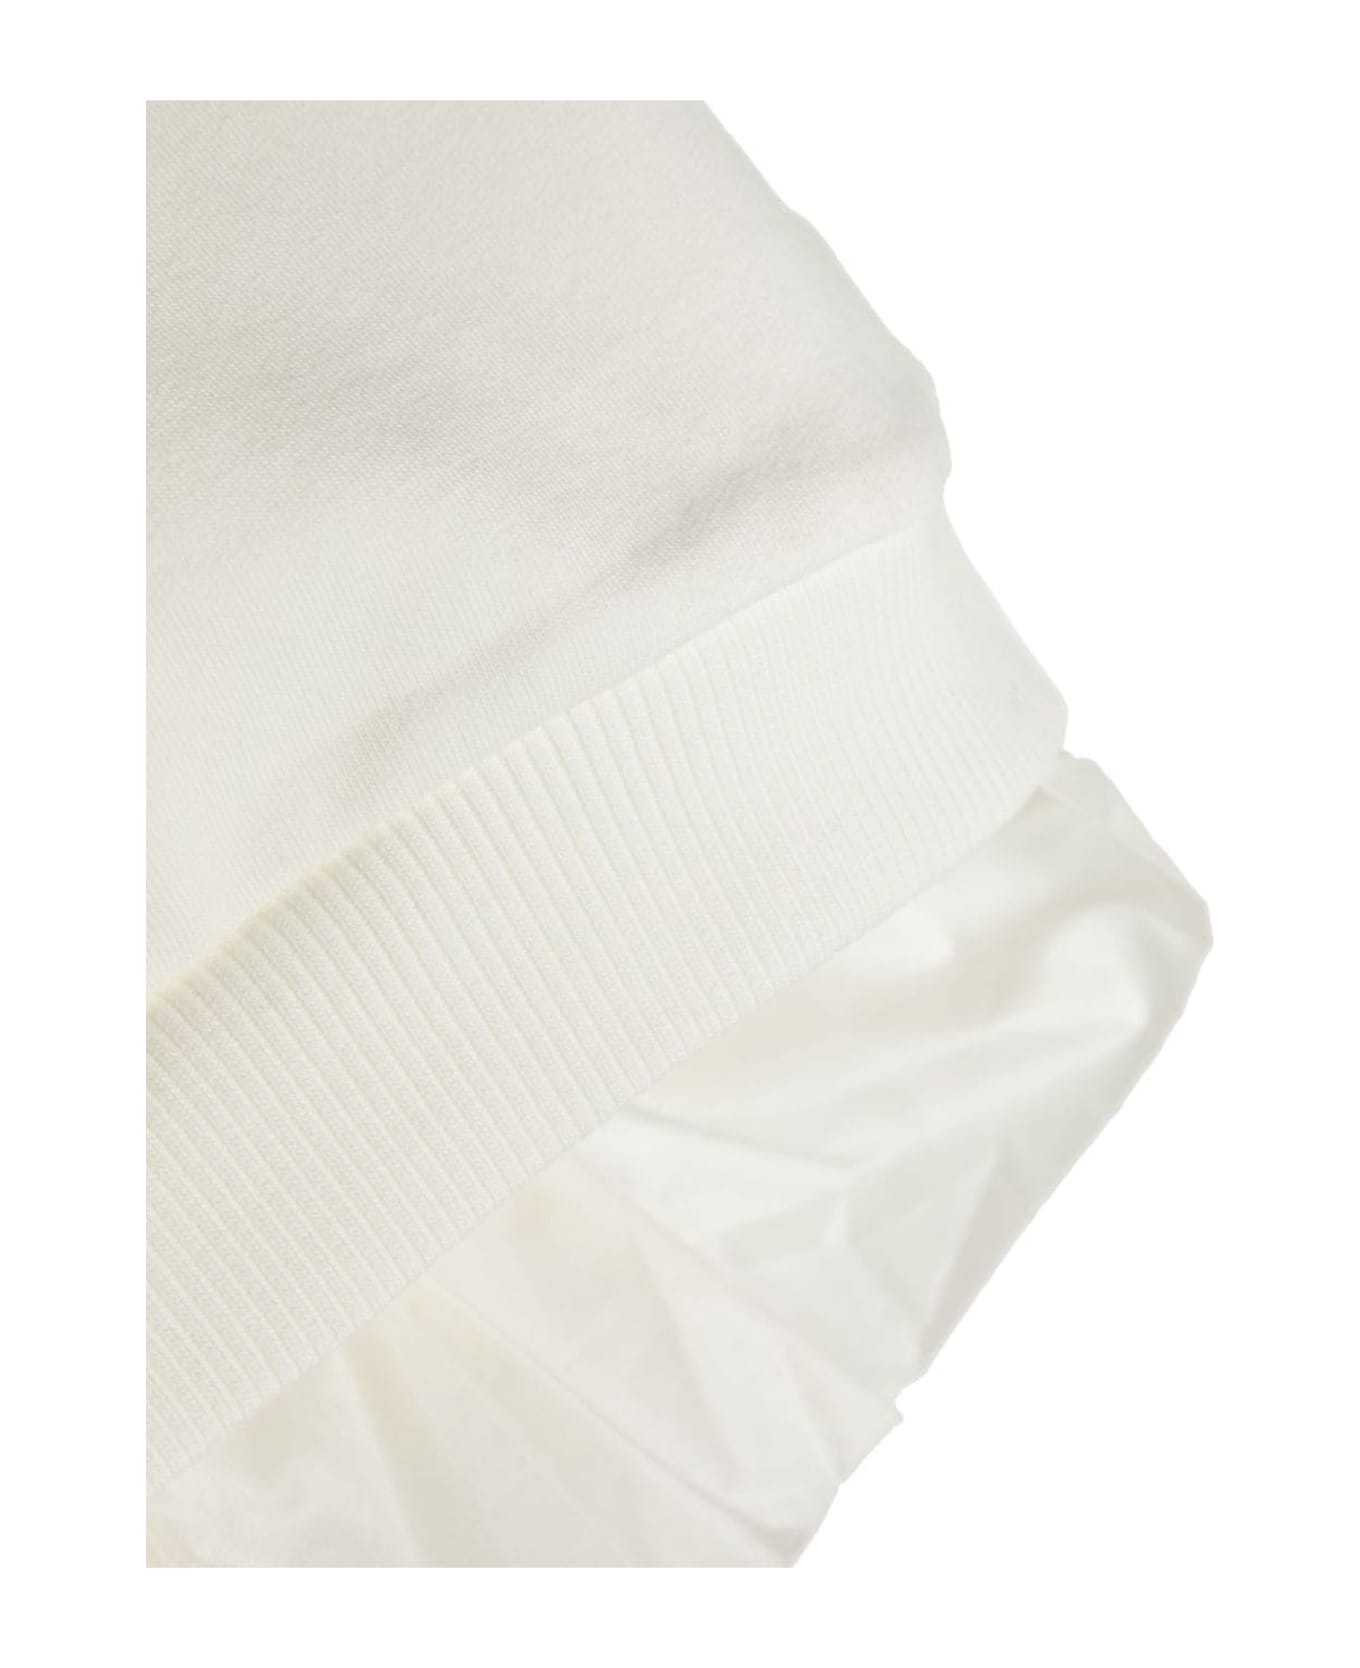 Moncler New Maya Sweaters White - White